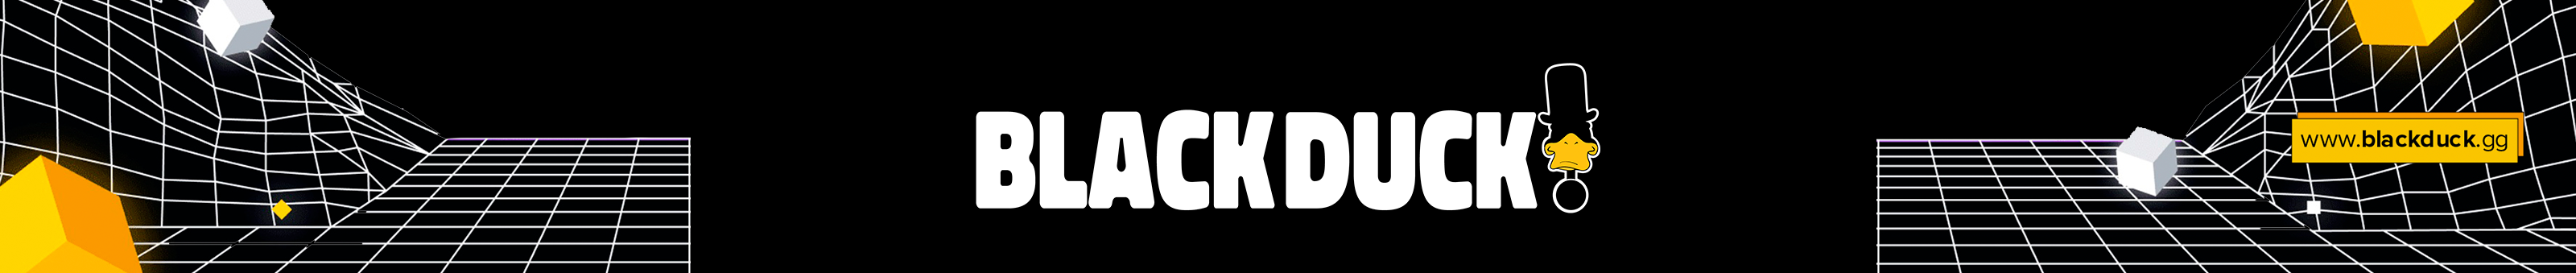 Agência Black Duck's profile banner